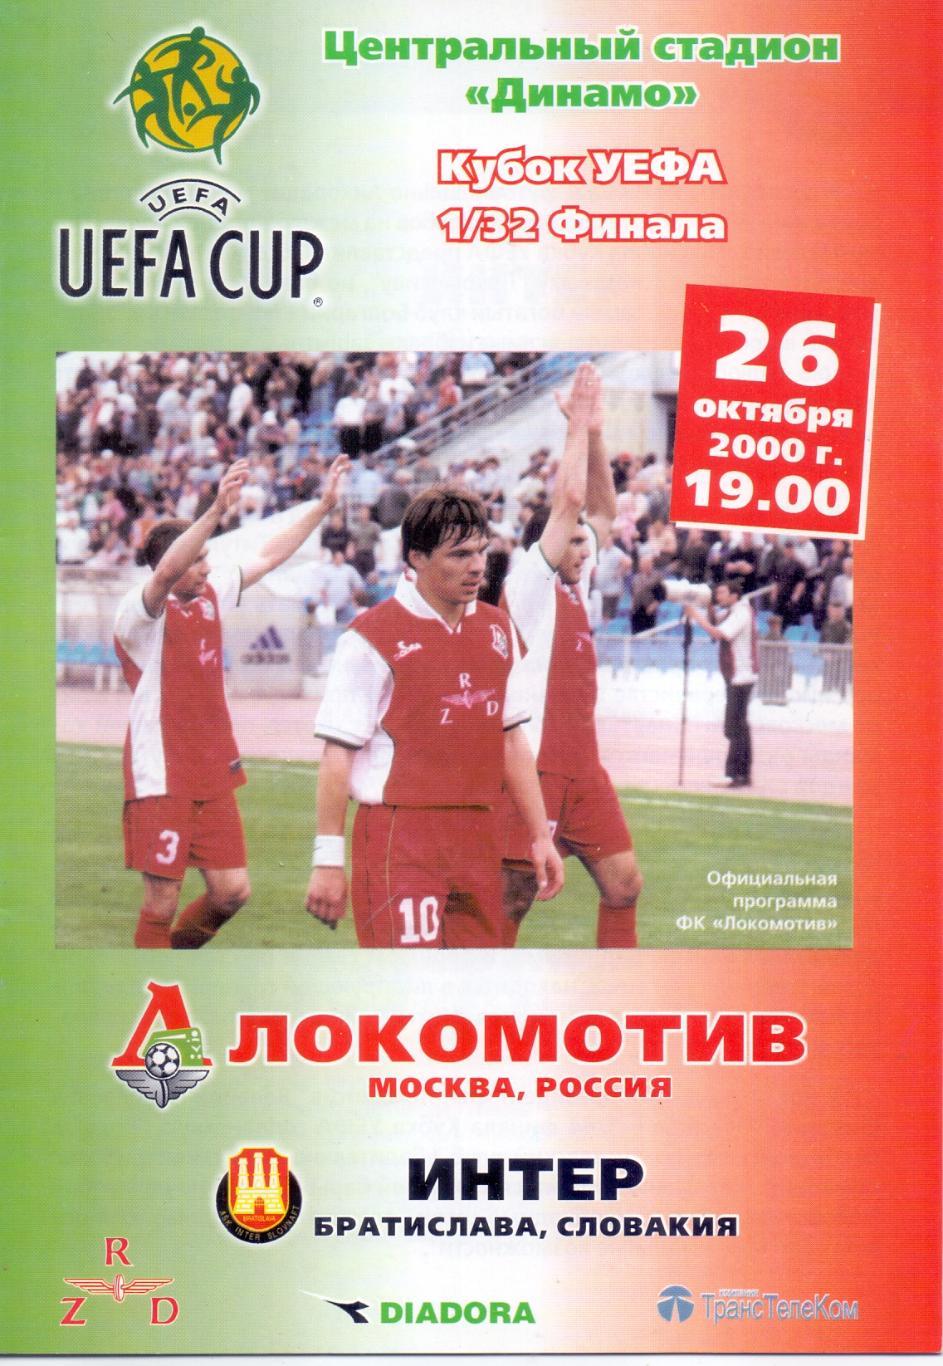 Кубок УЕФА. Локомотив Москва - Интер Братислава. 26.10.2000 года.